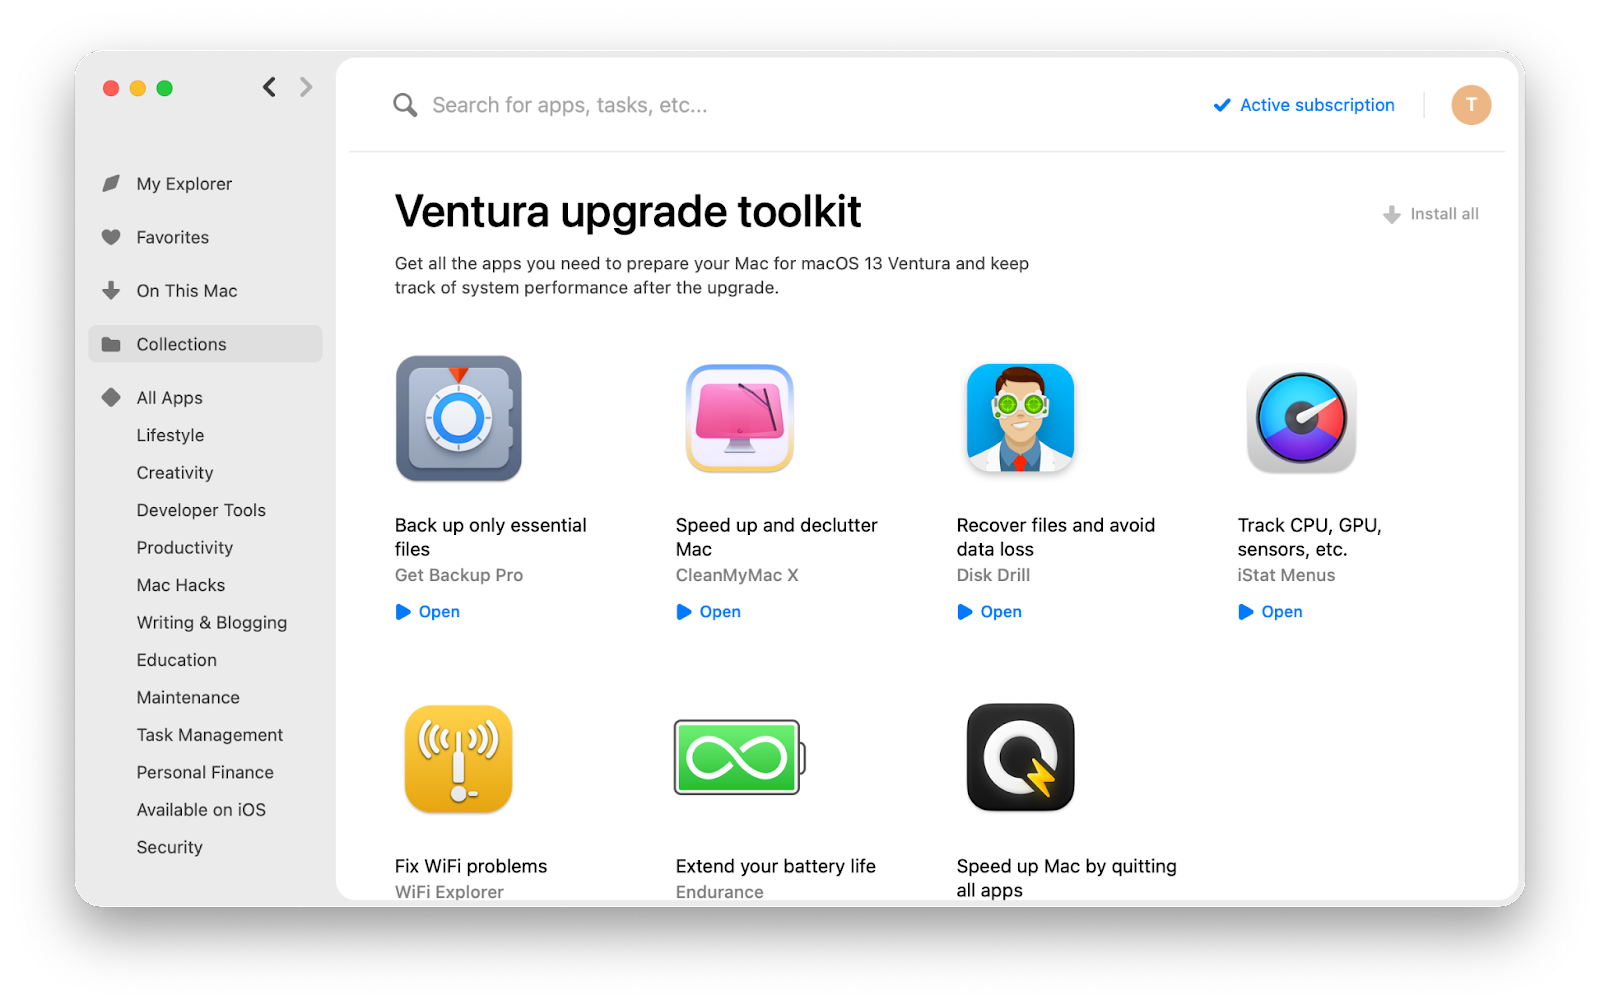 Ventura upgrade toolkit